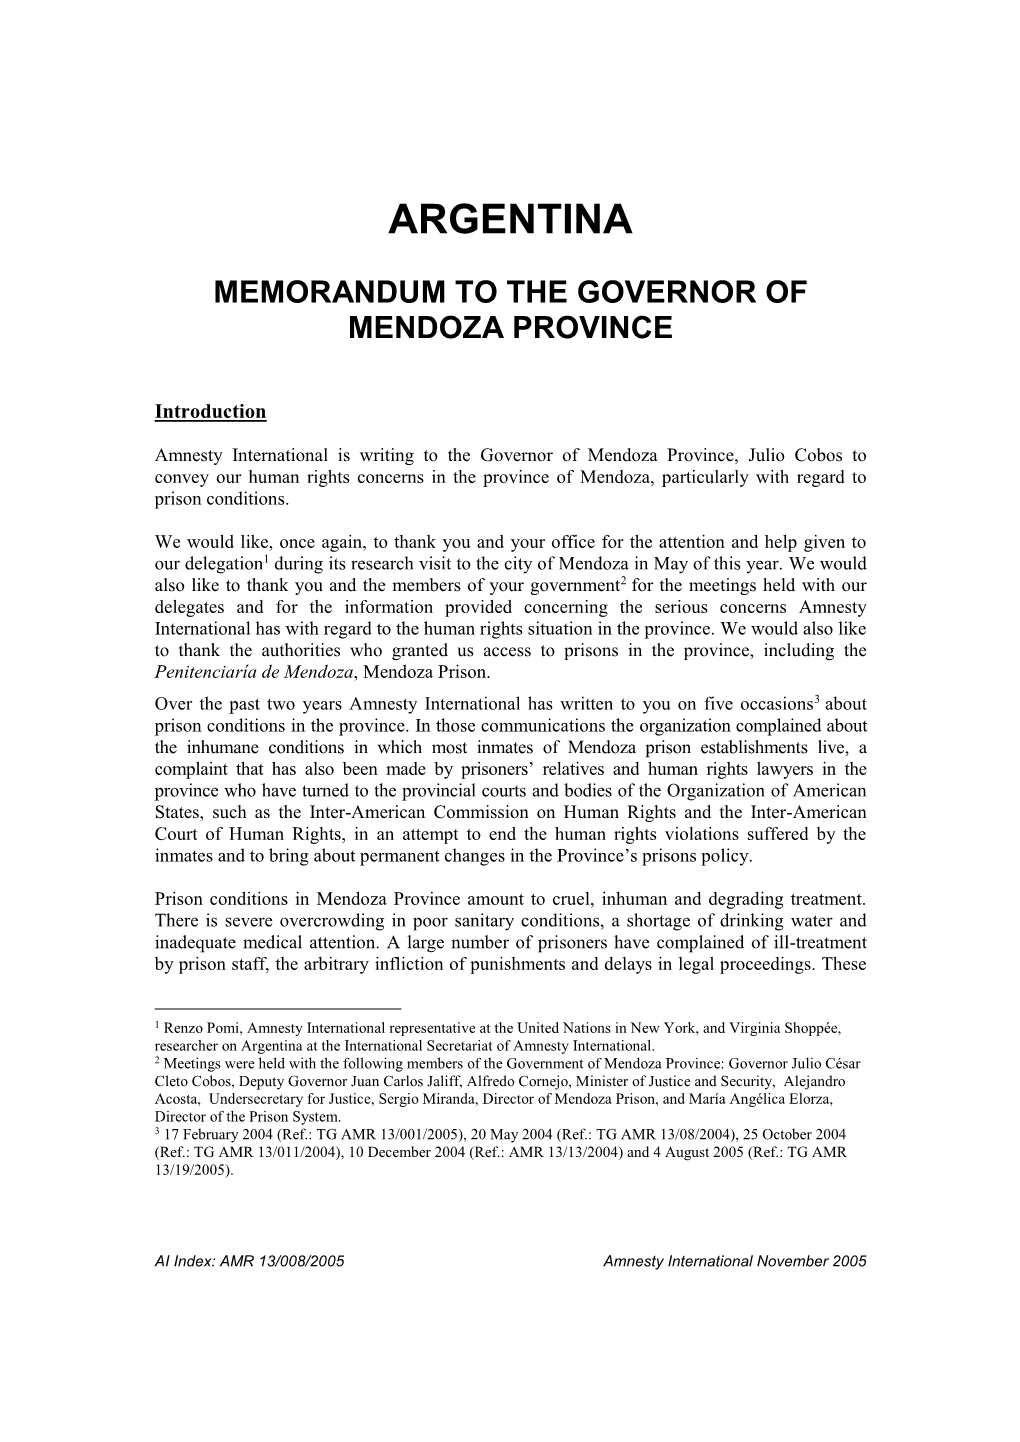 Memorandum to the Governor of Mendoza Province